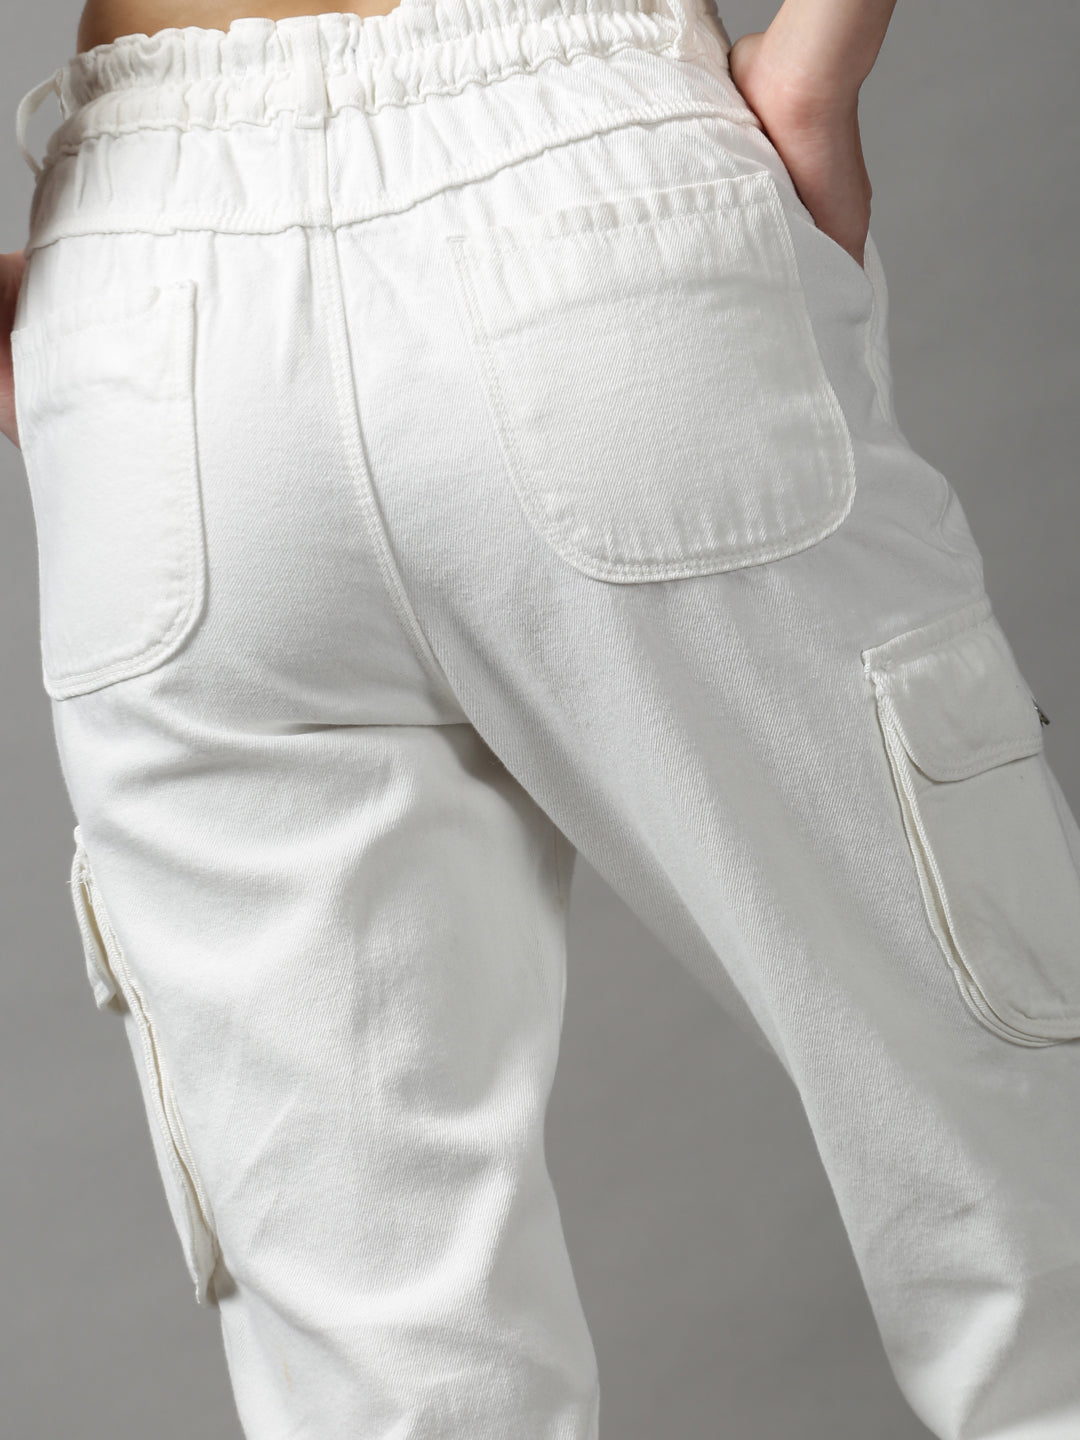 Women's White Solid Jogger Denim Jeans